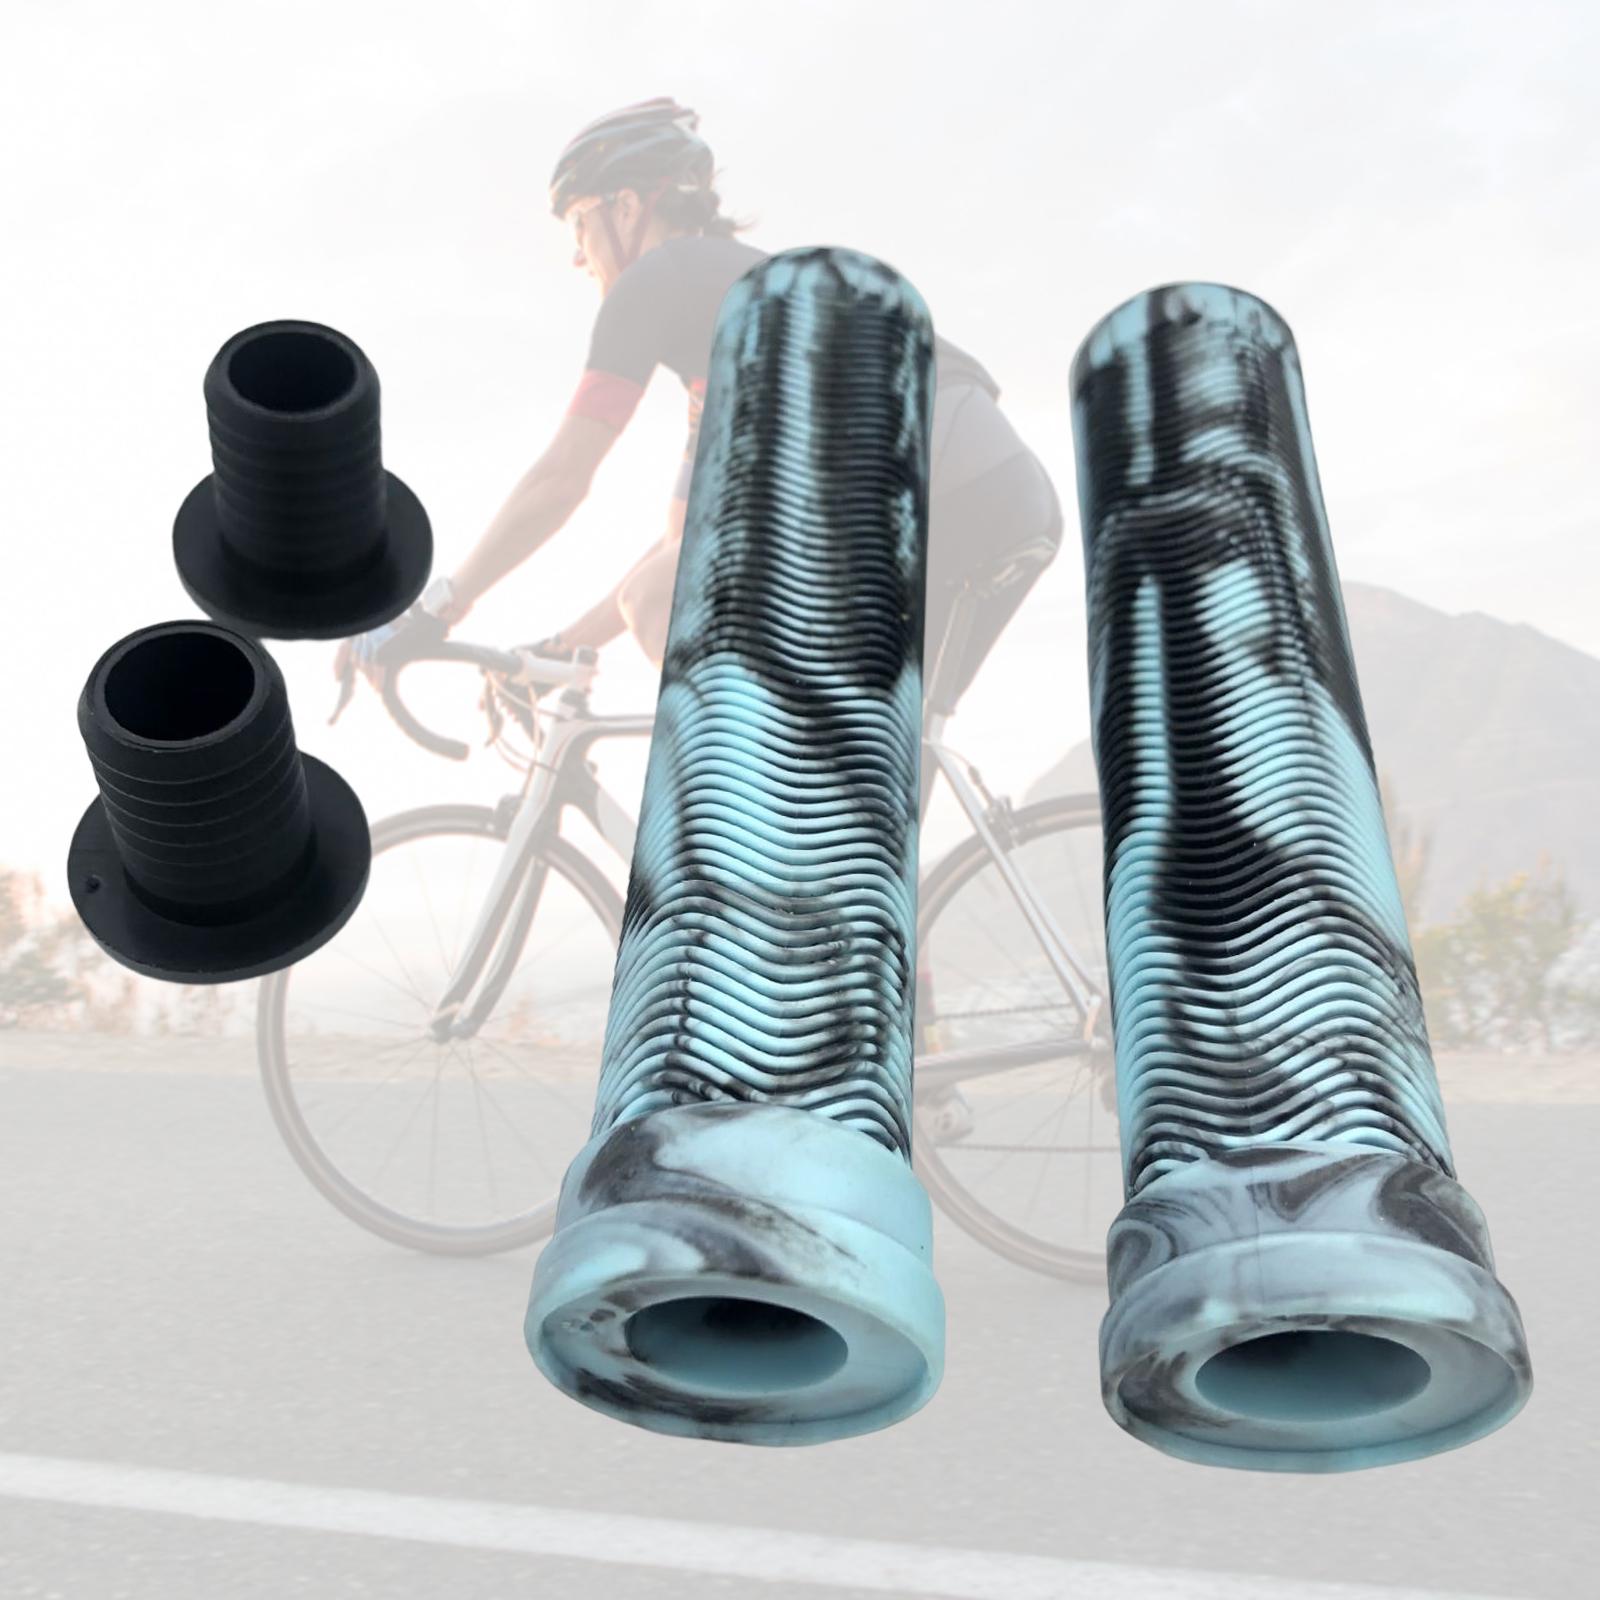 2x Soft Handlebar Grips Sleeve Anti-Skid Comfortable for BMX Sports Cycling Light Blue